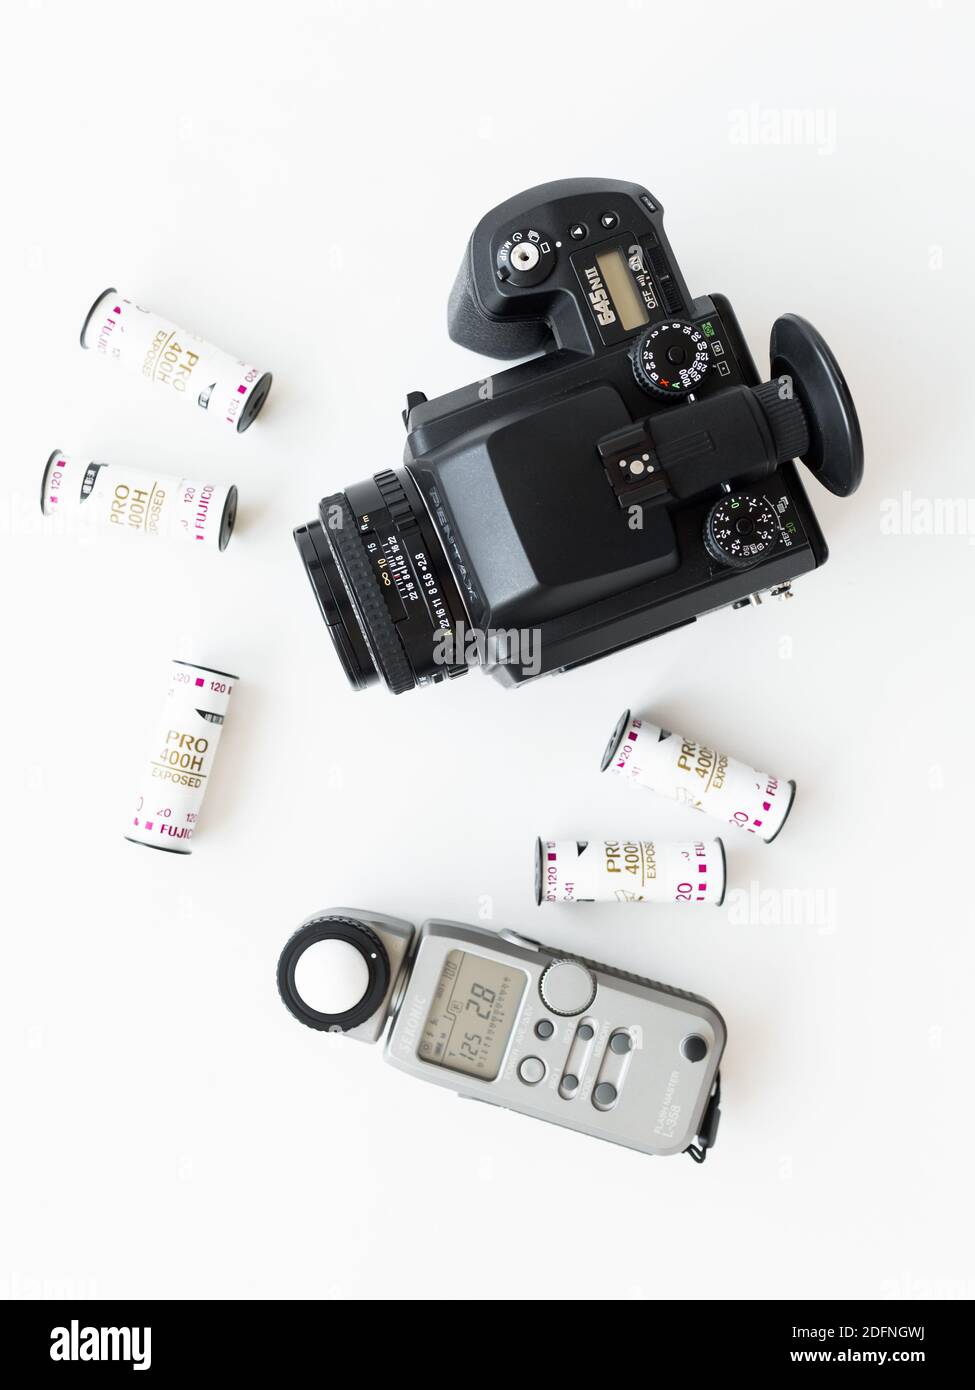 The Battle of Fujifilm's Top Mirrorless Cameras: X-T30 II vs. X100V